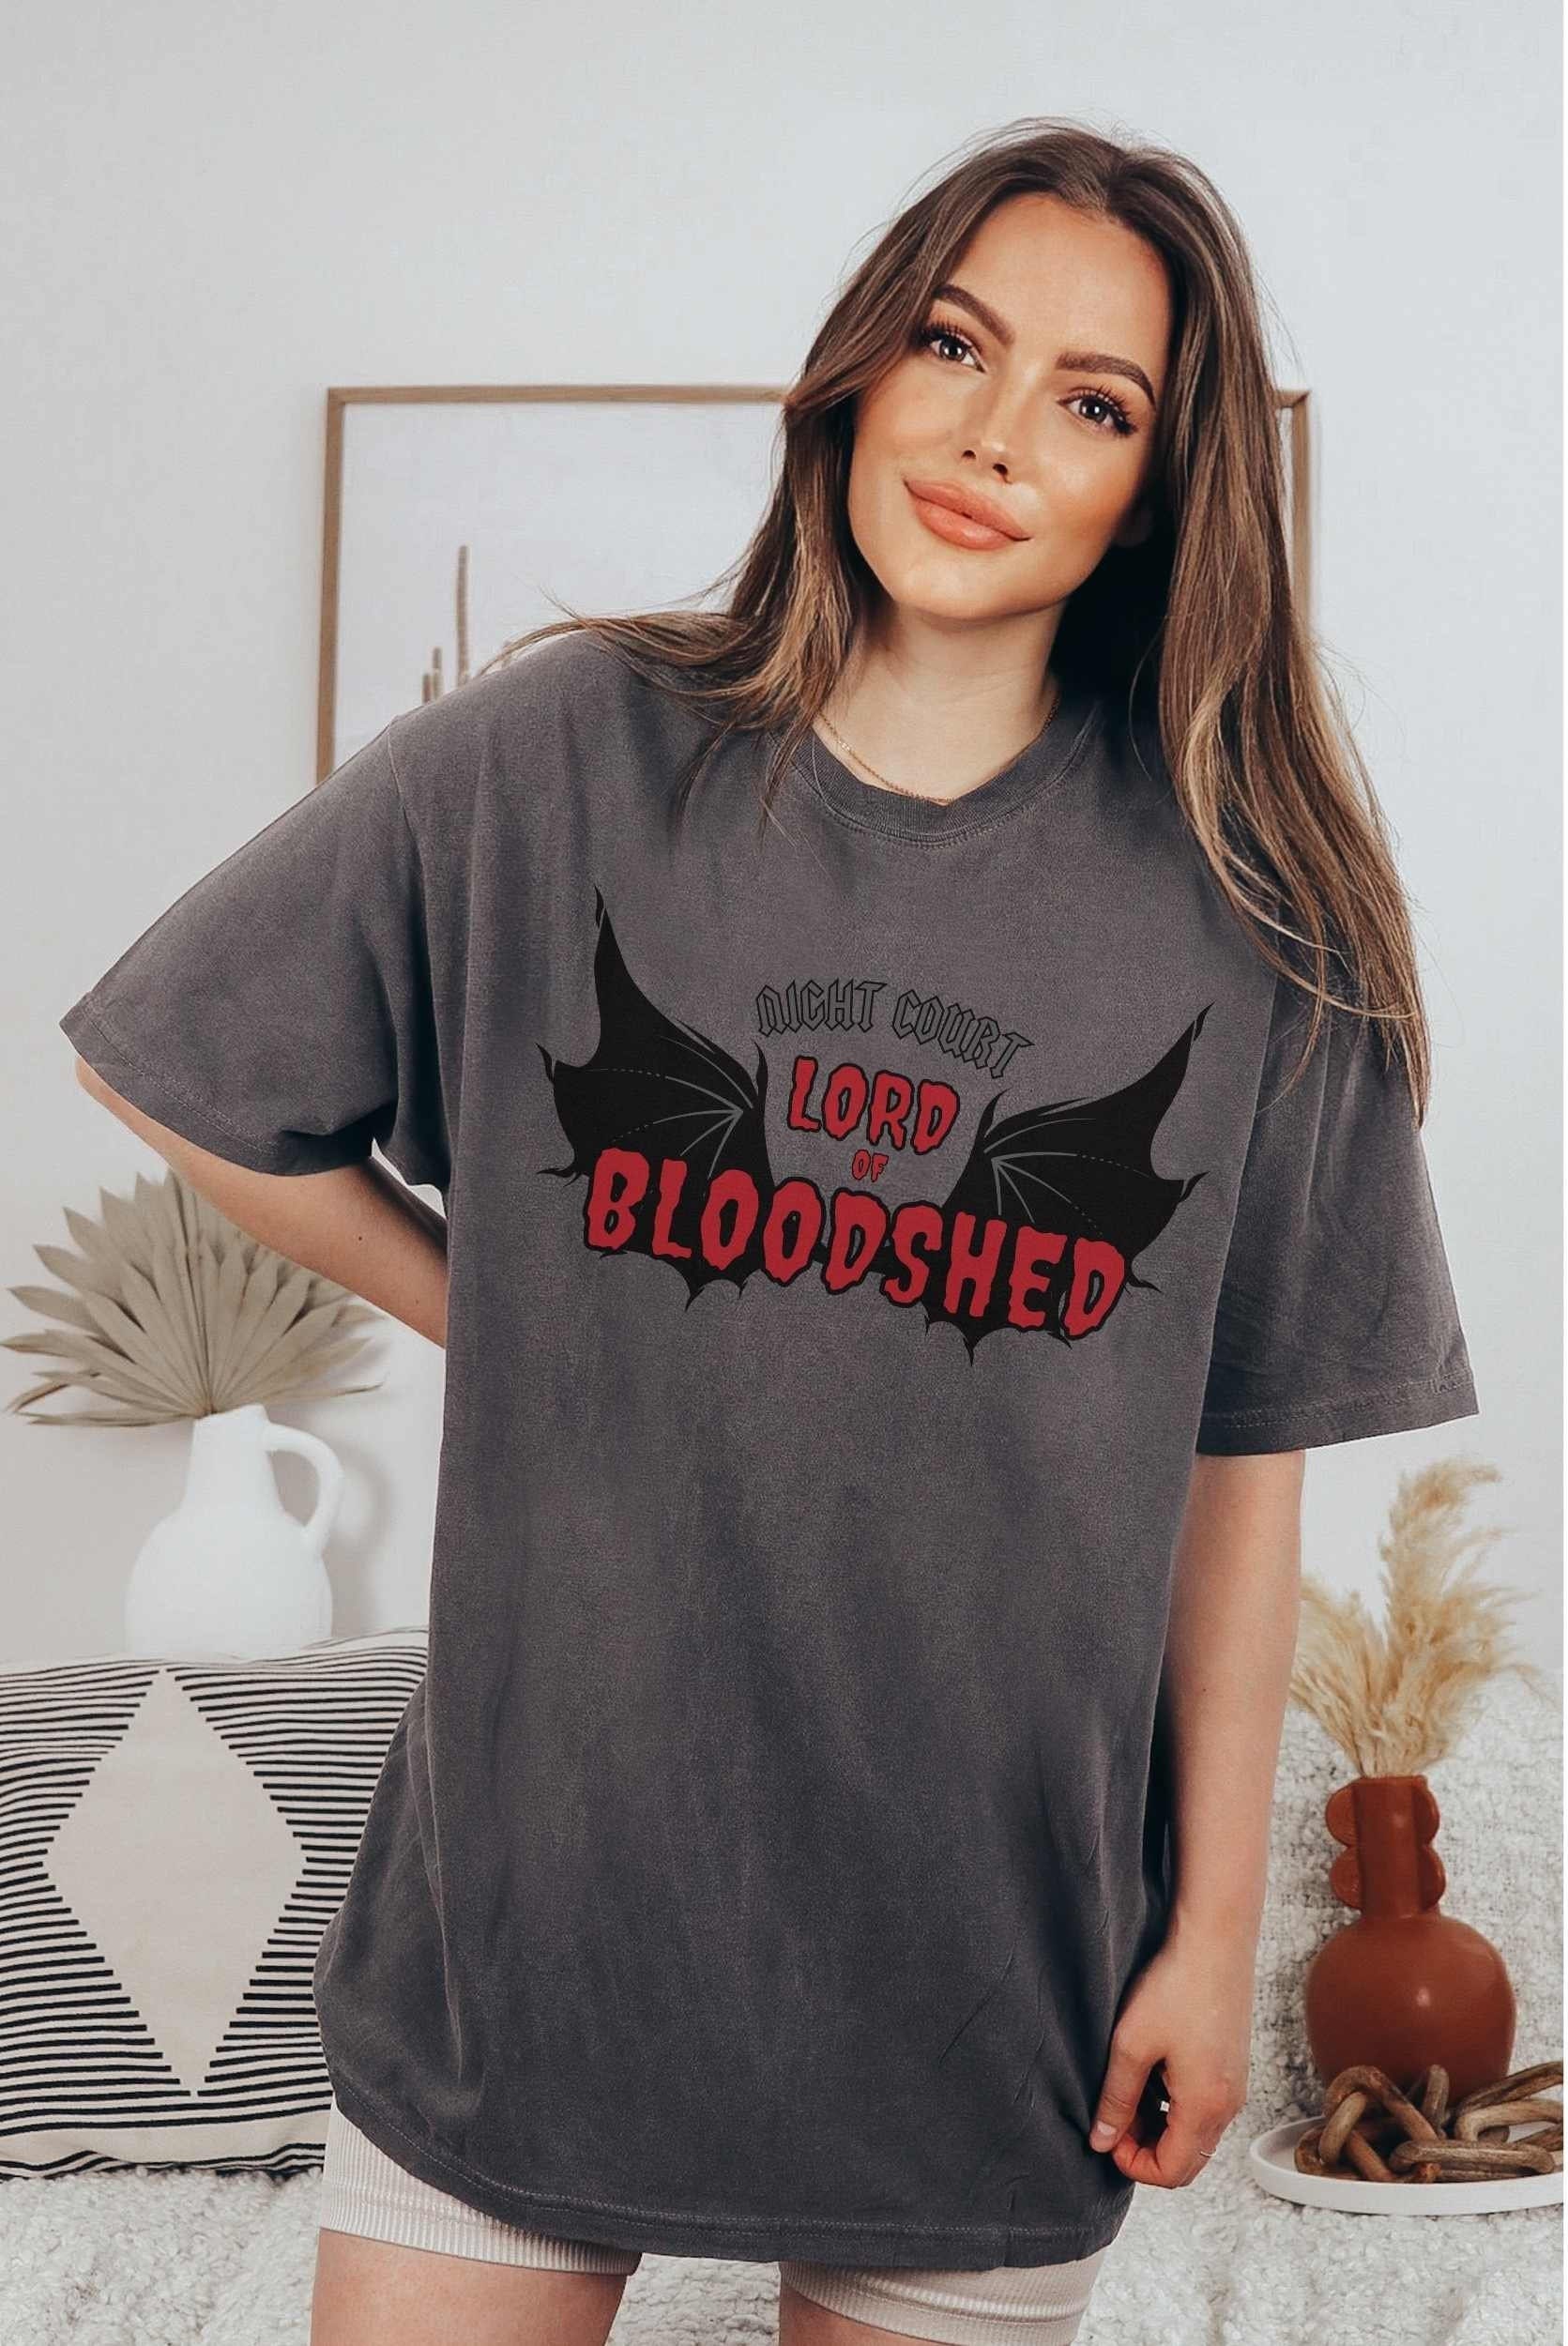 Discover ACOTAR Lord of Bloodshed Shirt, Bat Boys Shirt, Night Court